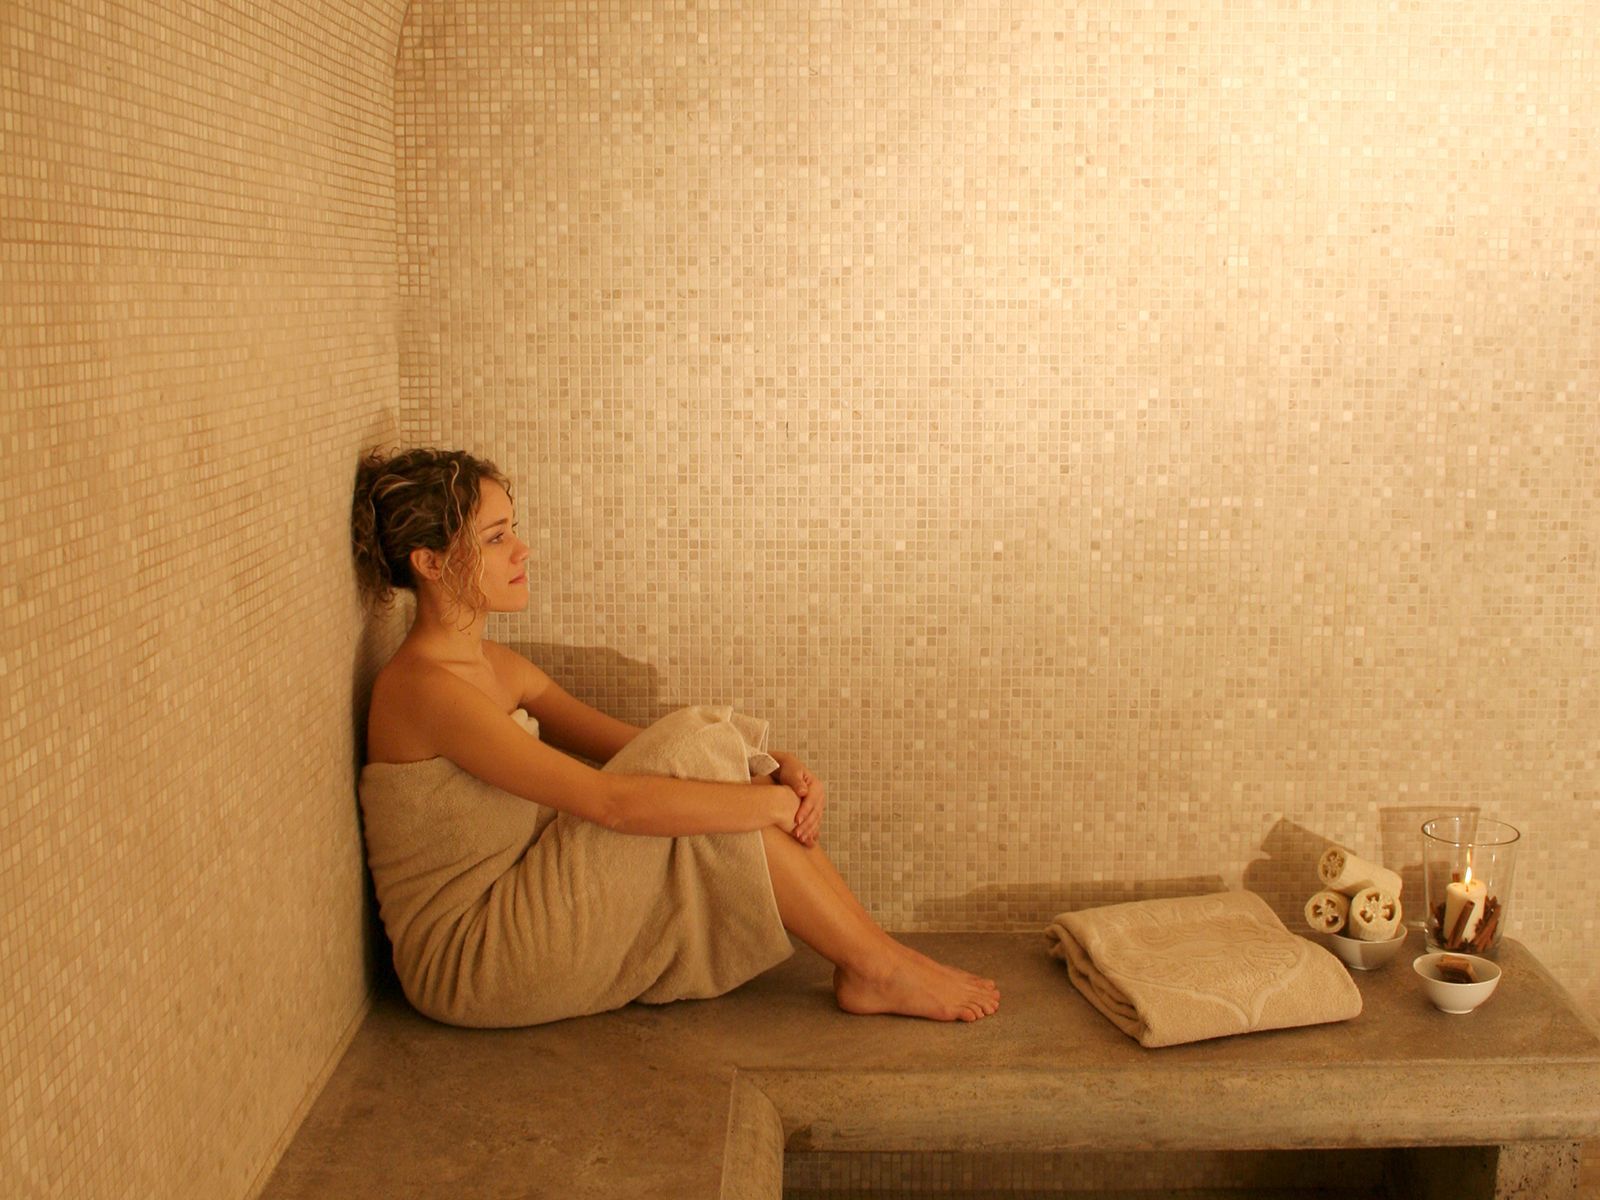 Staying in spa Special ”Notti di Benessere” Privilege room